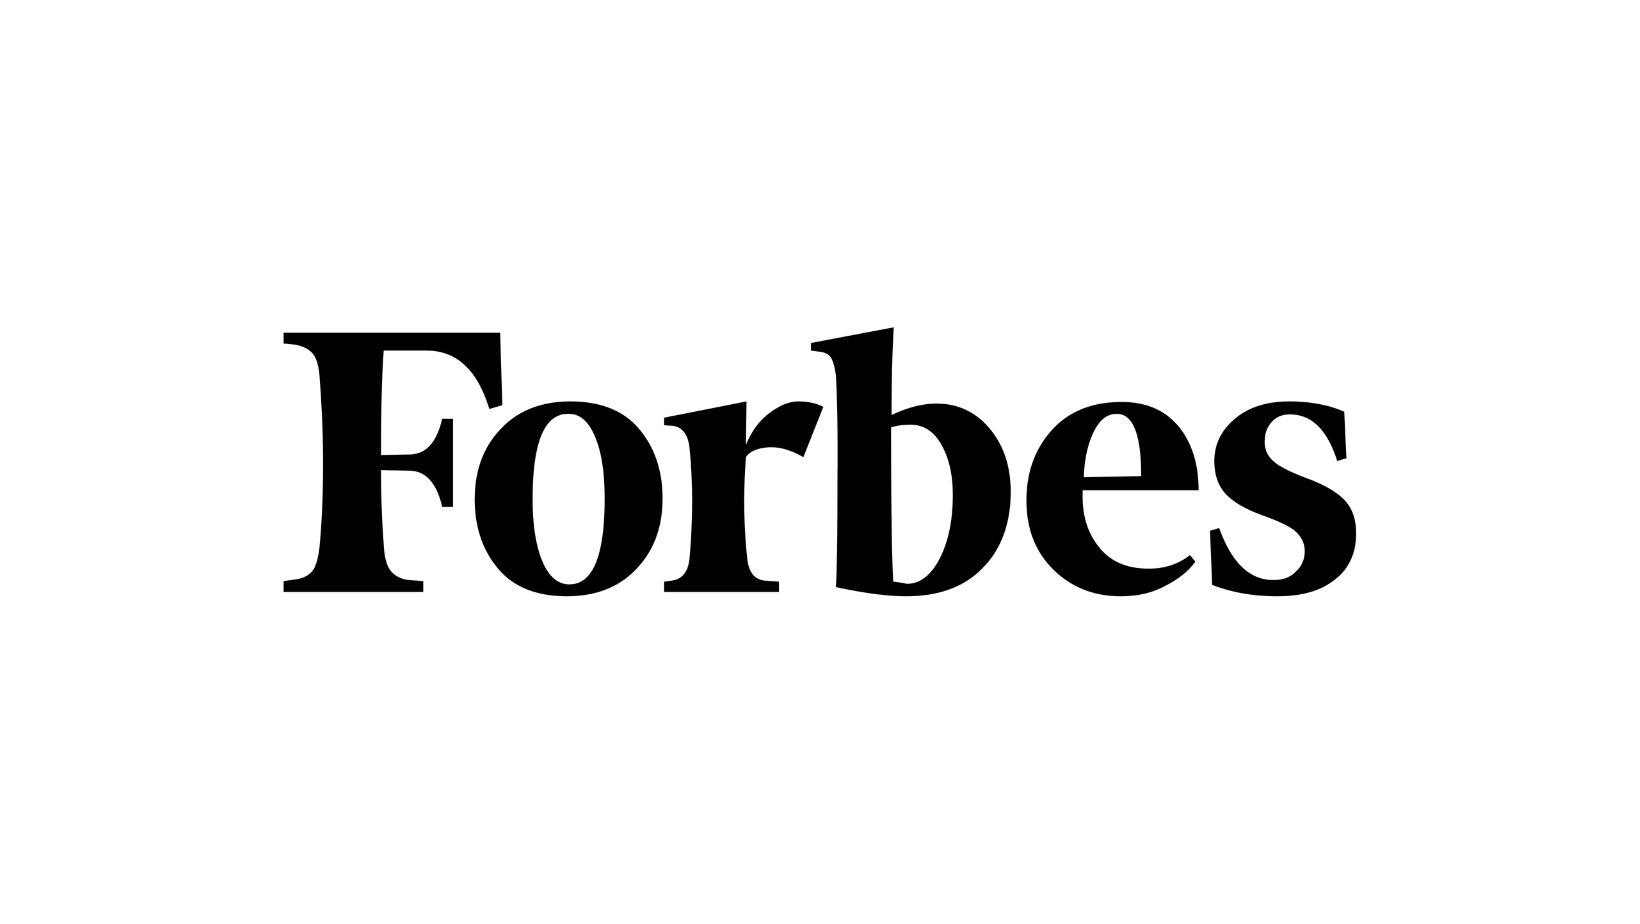 Gyerekkorod kismotorja a friss Forbesban